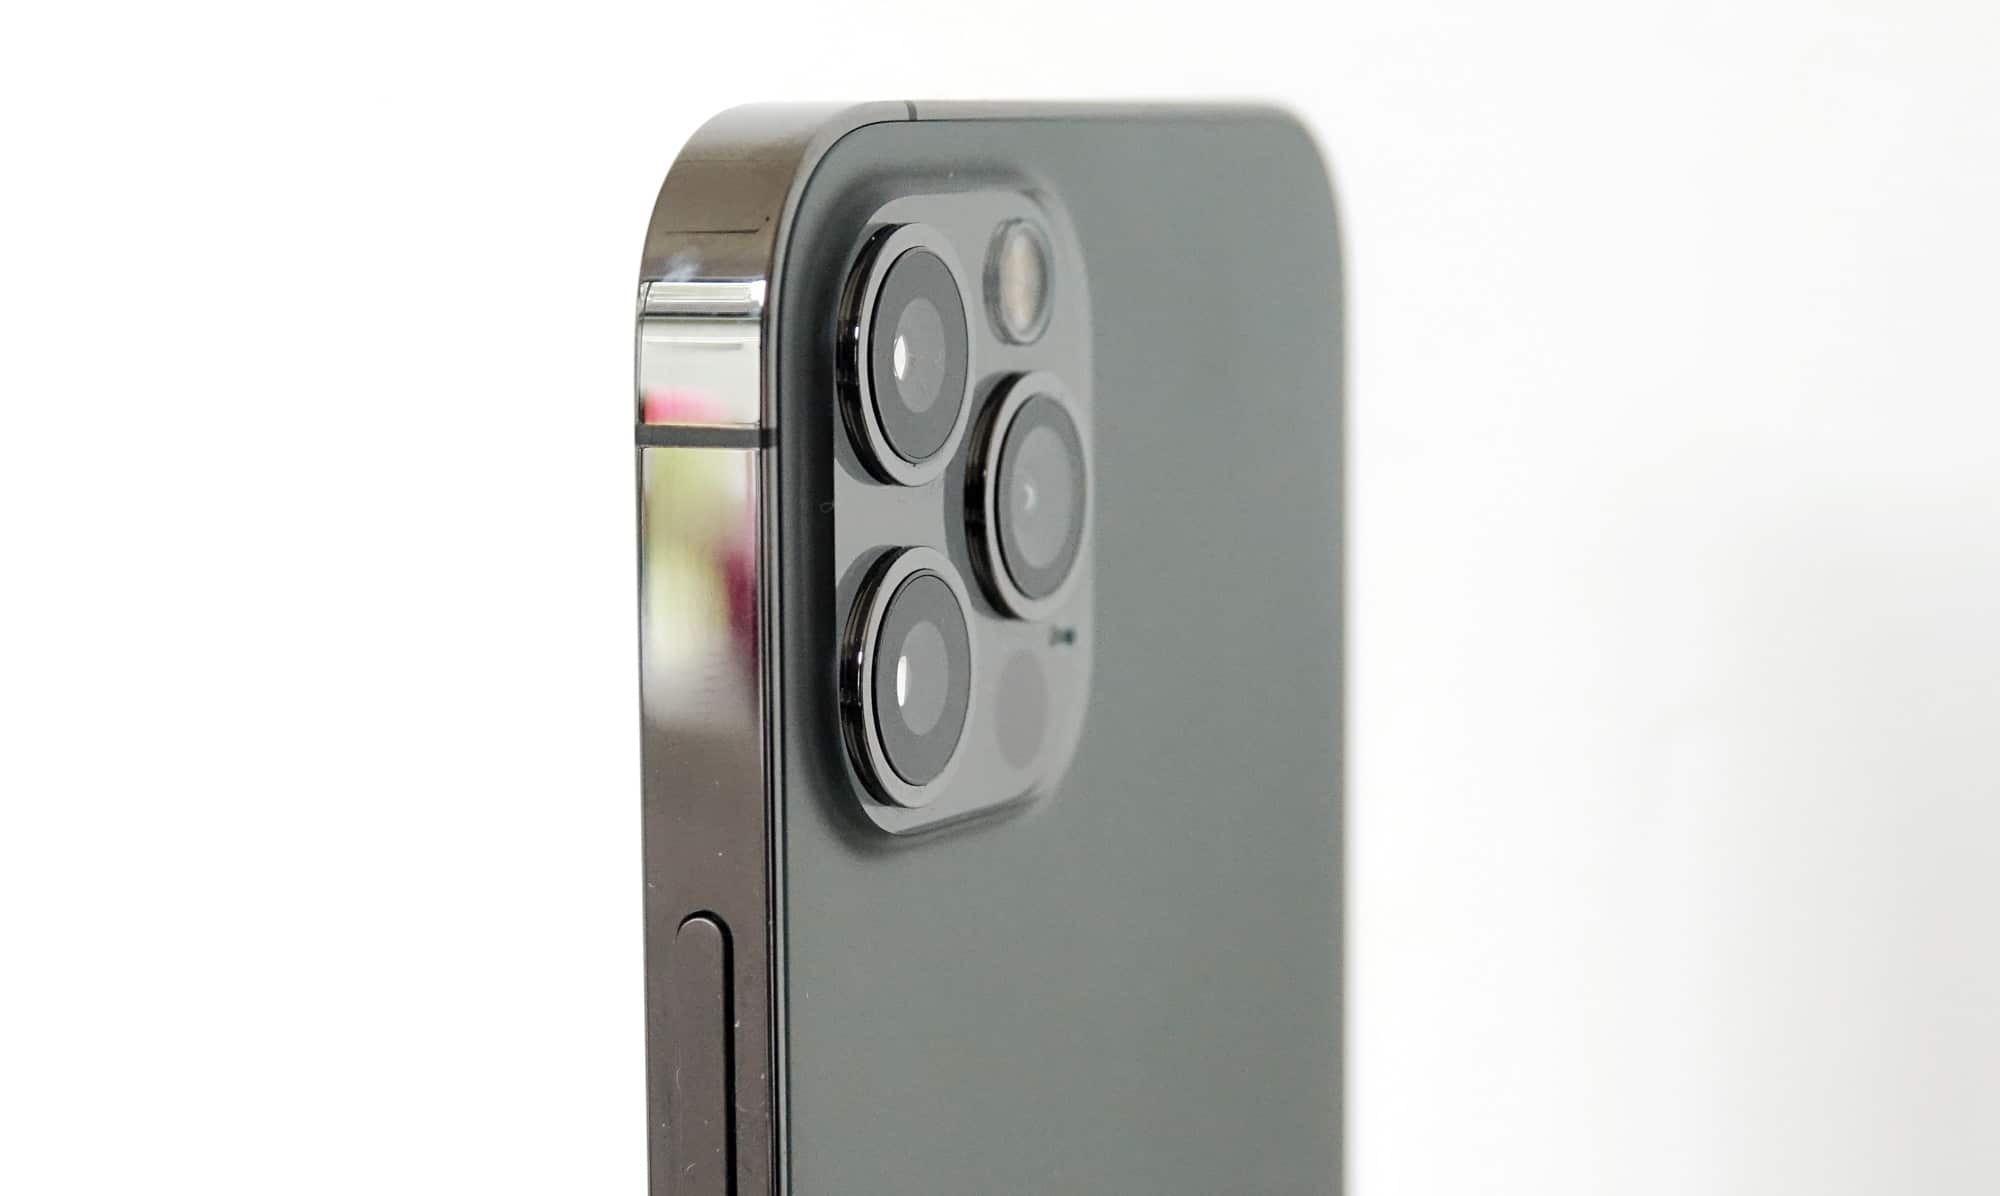 Apple iPhone 12 Pro cameras